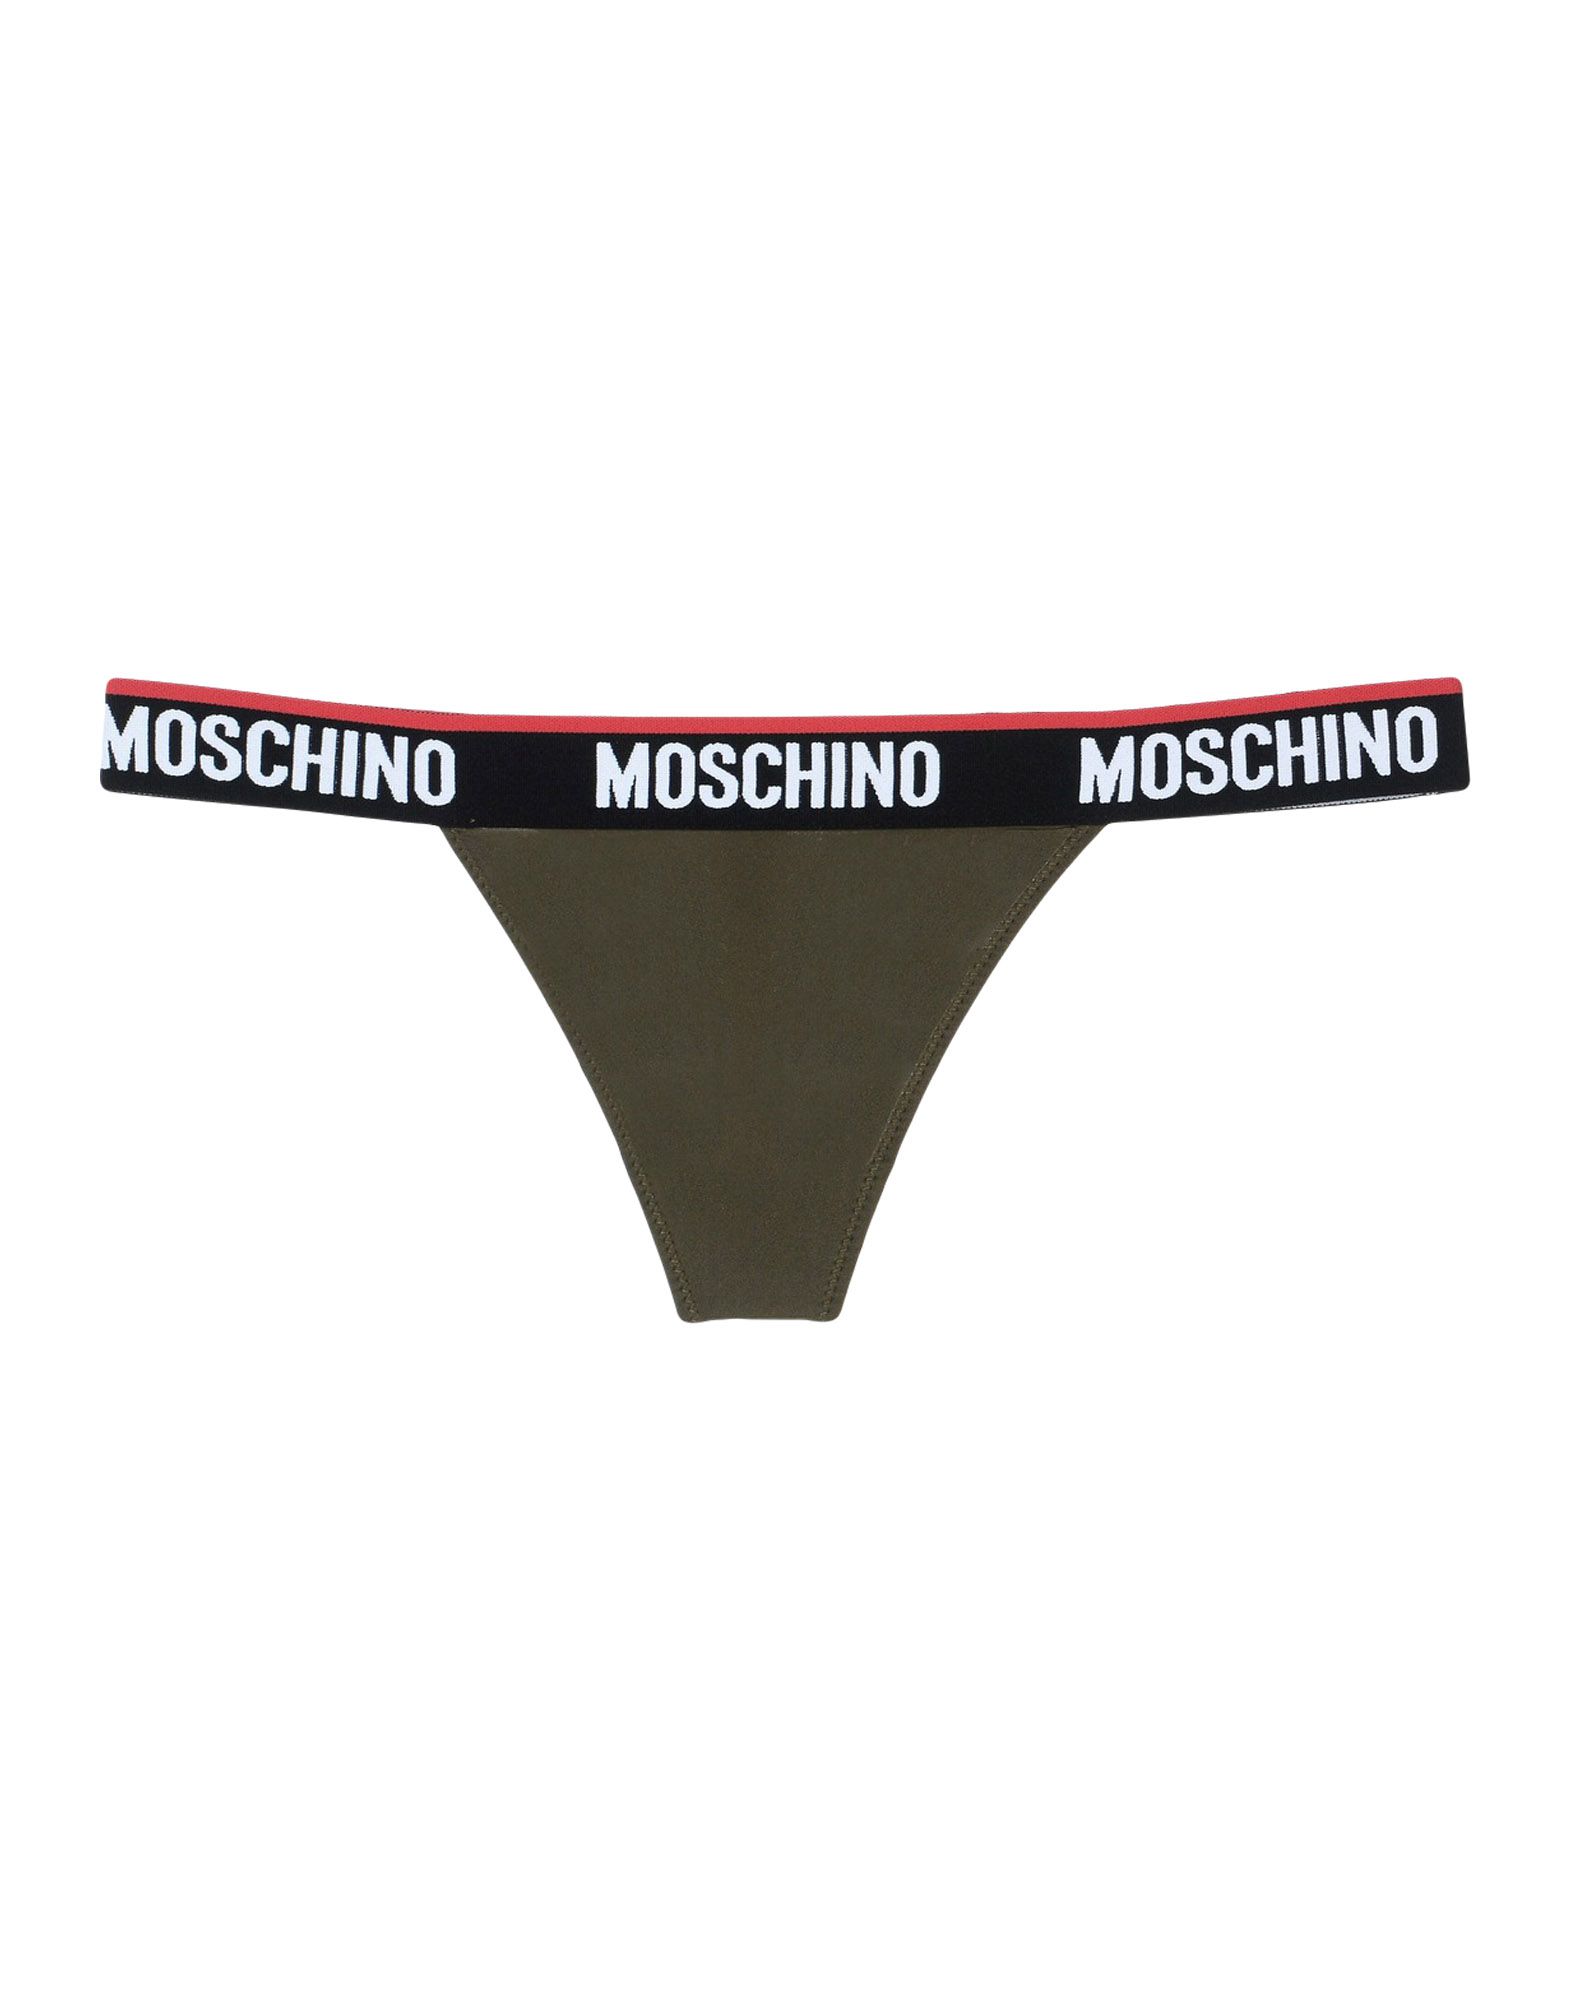 MOSCHINO G-STRINGS,48203527WK 4